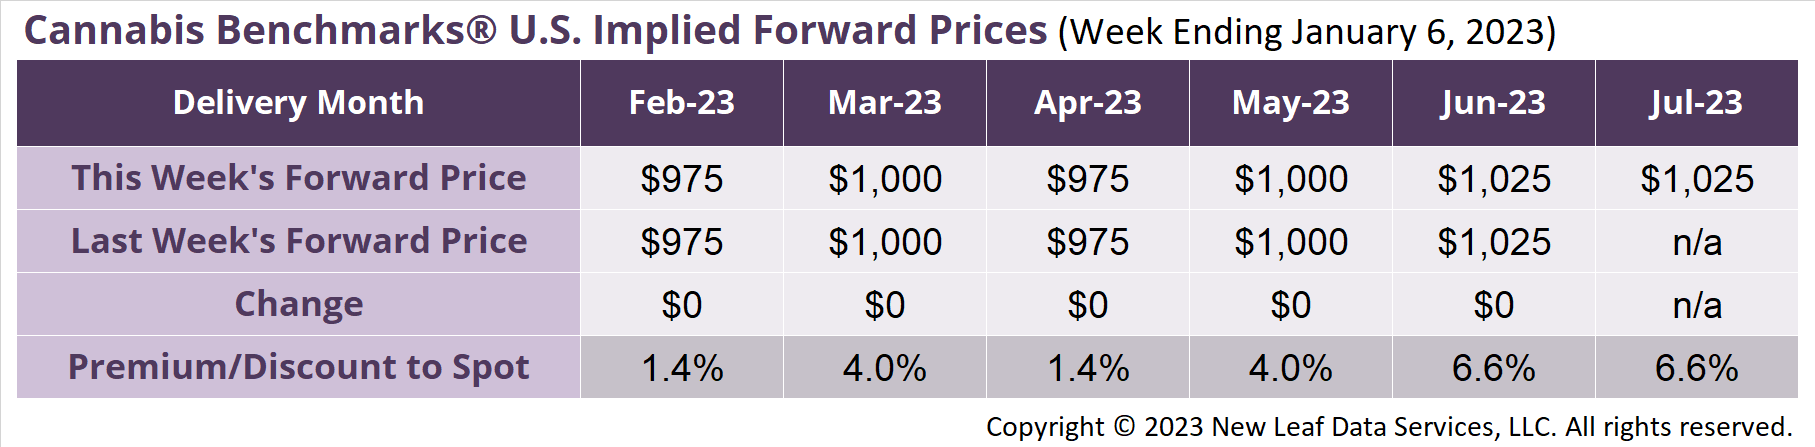 Cannabis Benchmarks U.S Forward Price Curve January 6, 2023